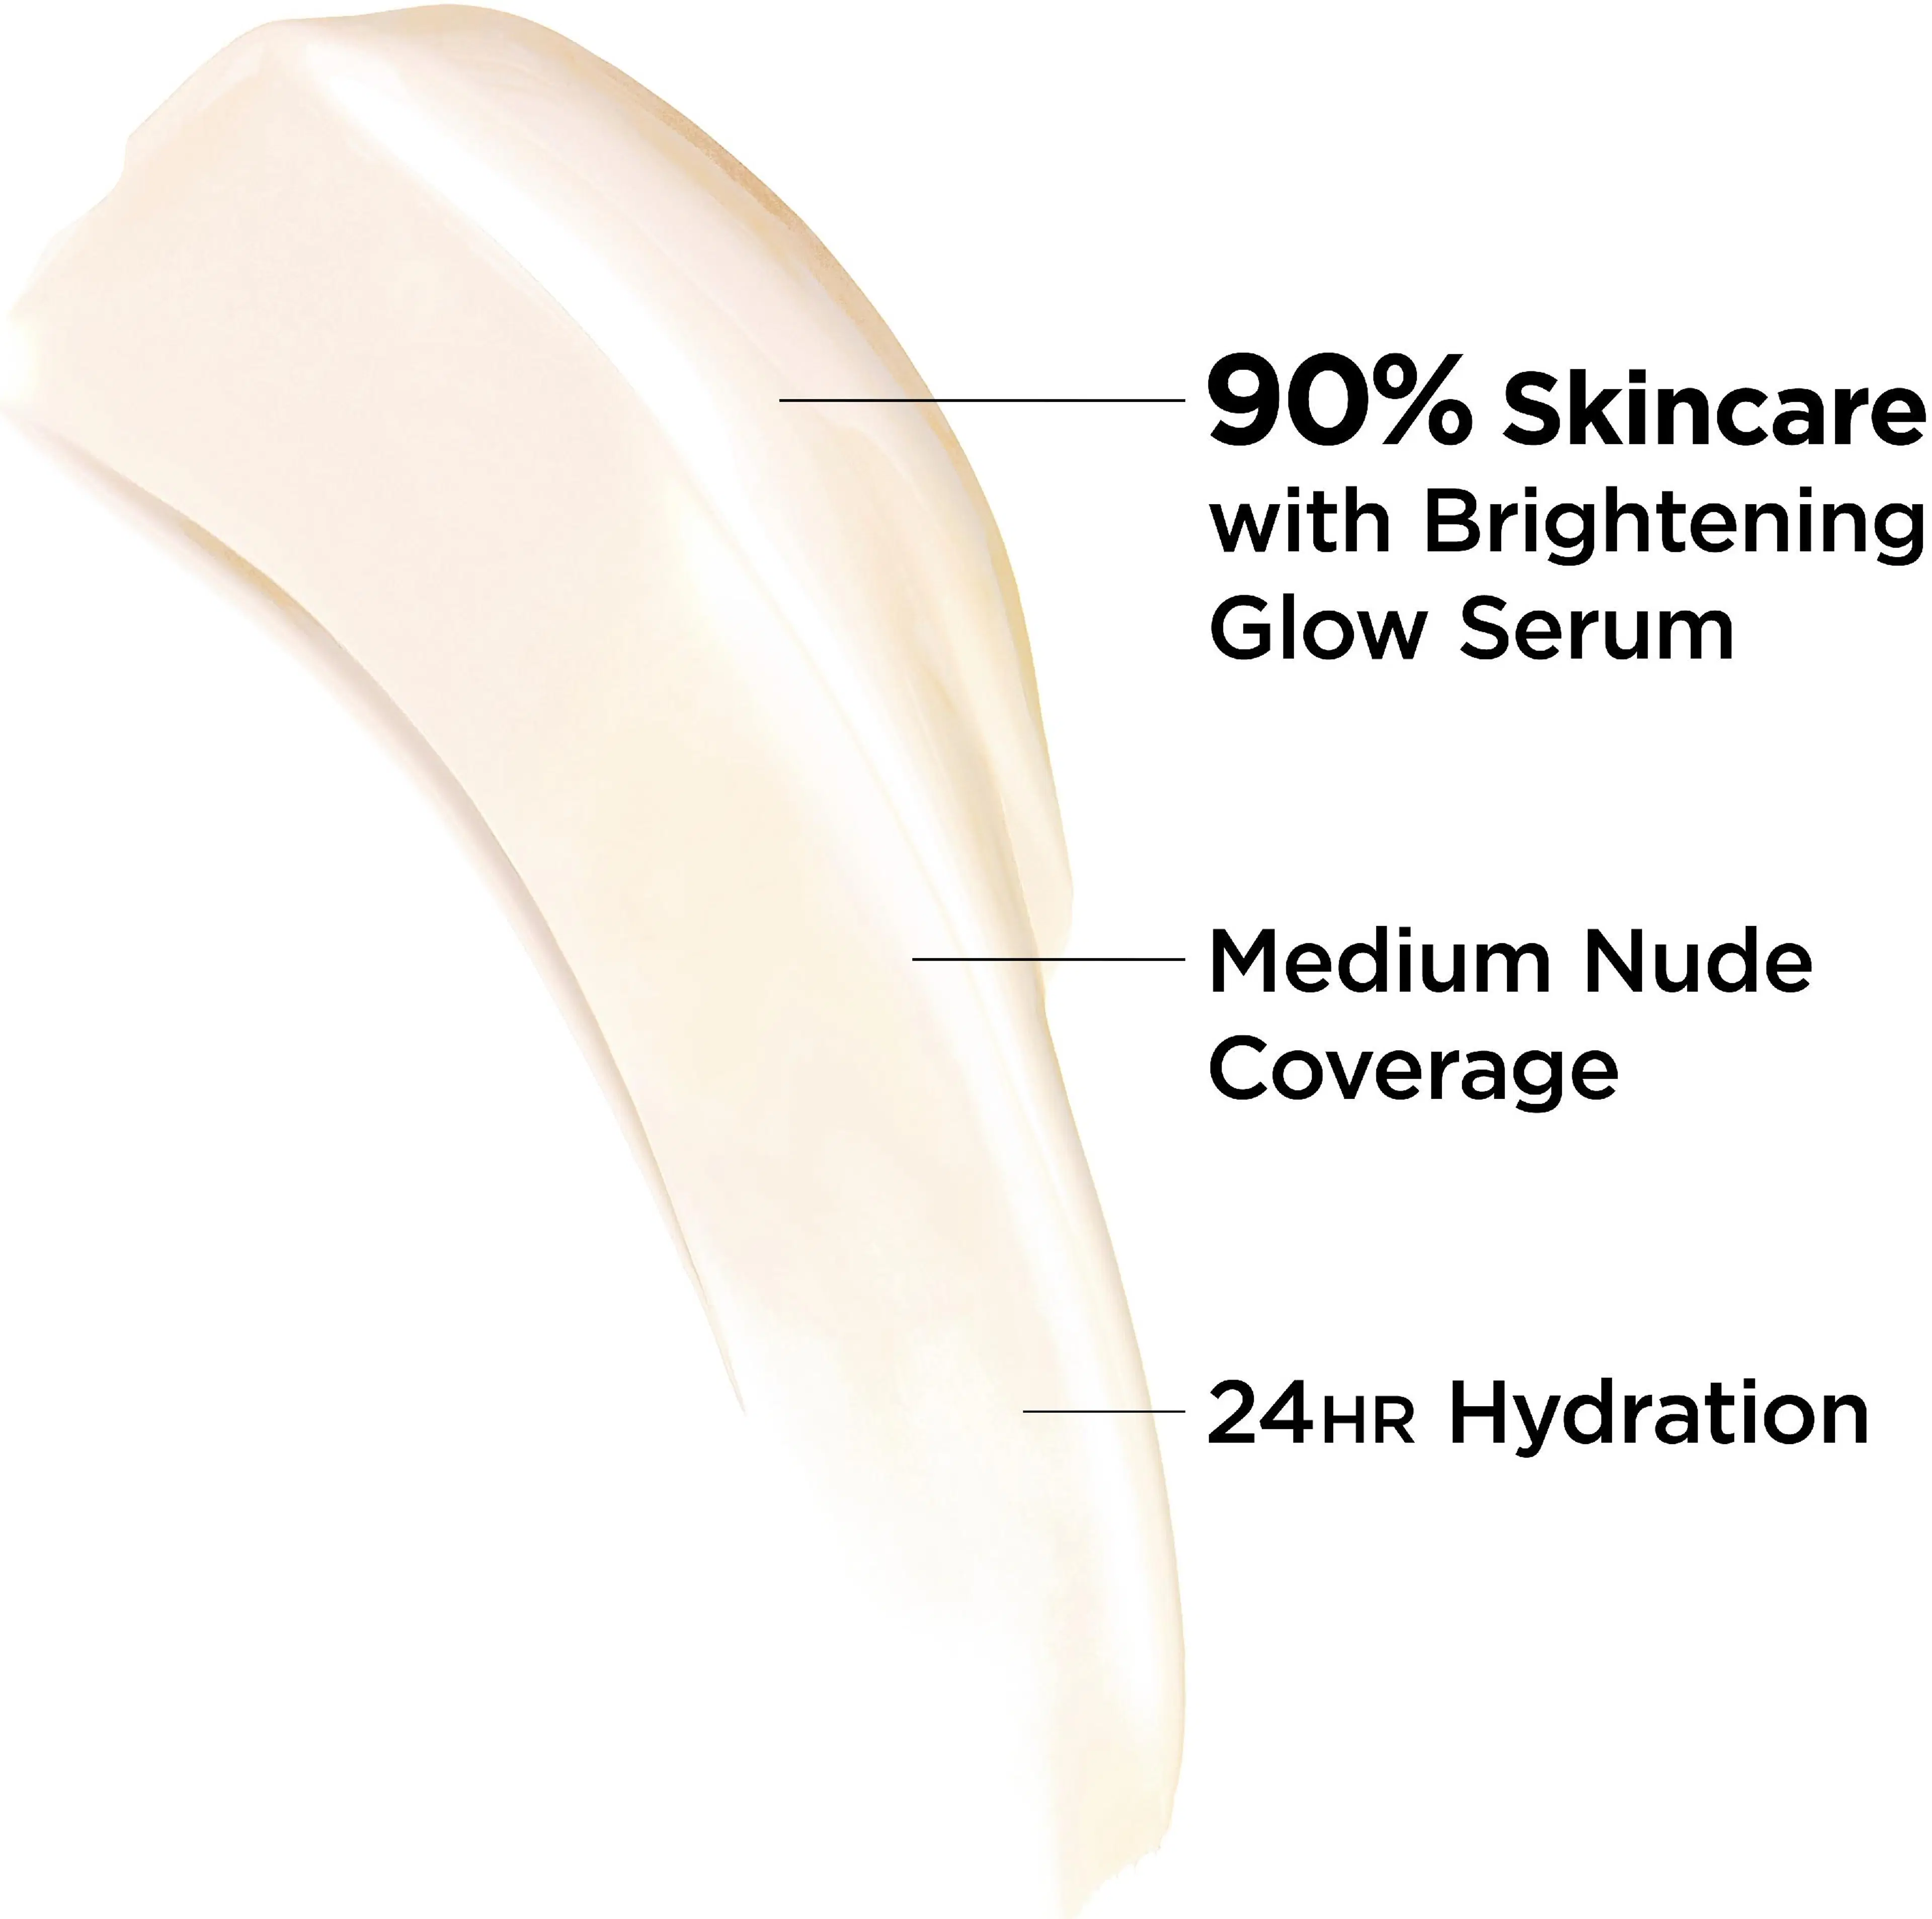 IT Cosmetics CC+ Nude Glow SPF 40 meikkivoide 32 ml